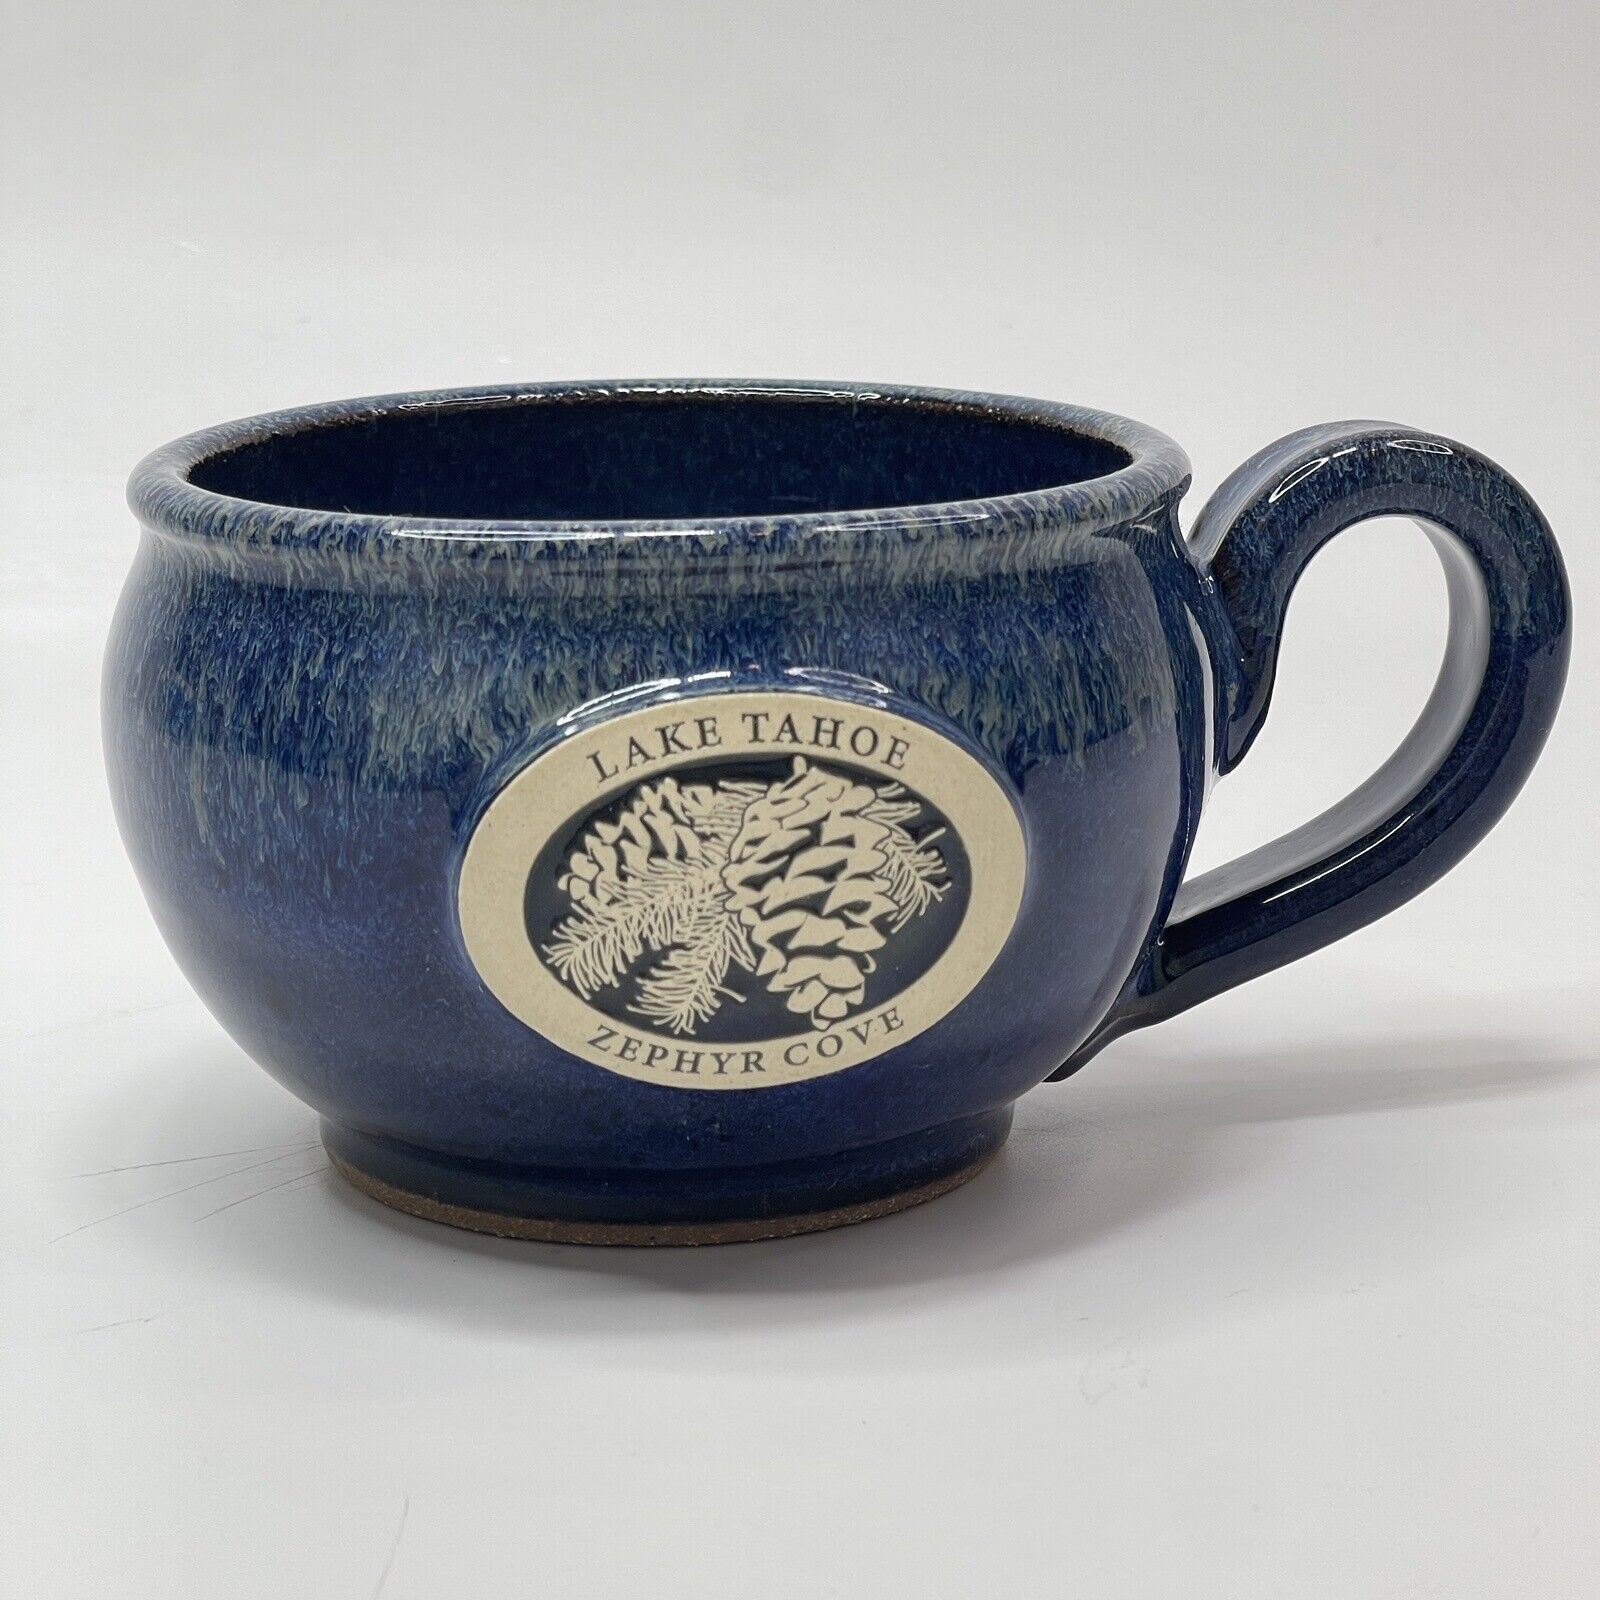 Sunset Hill Stoneware Pottery Mug, \'Lake Tahoe Zephy Cove\' Glazed Coffee Tea Mug